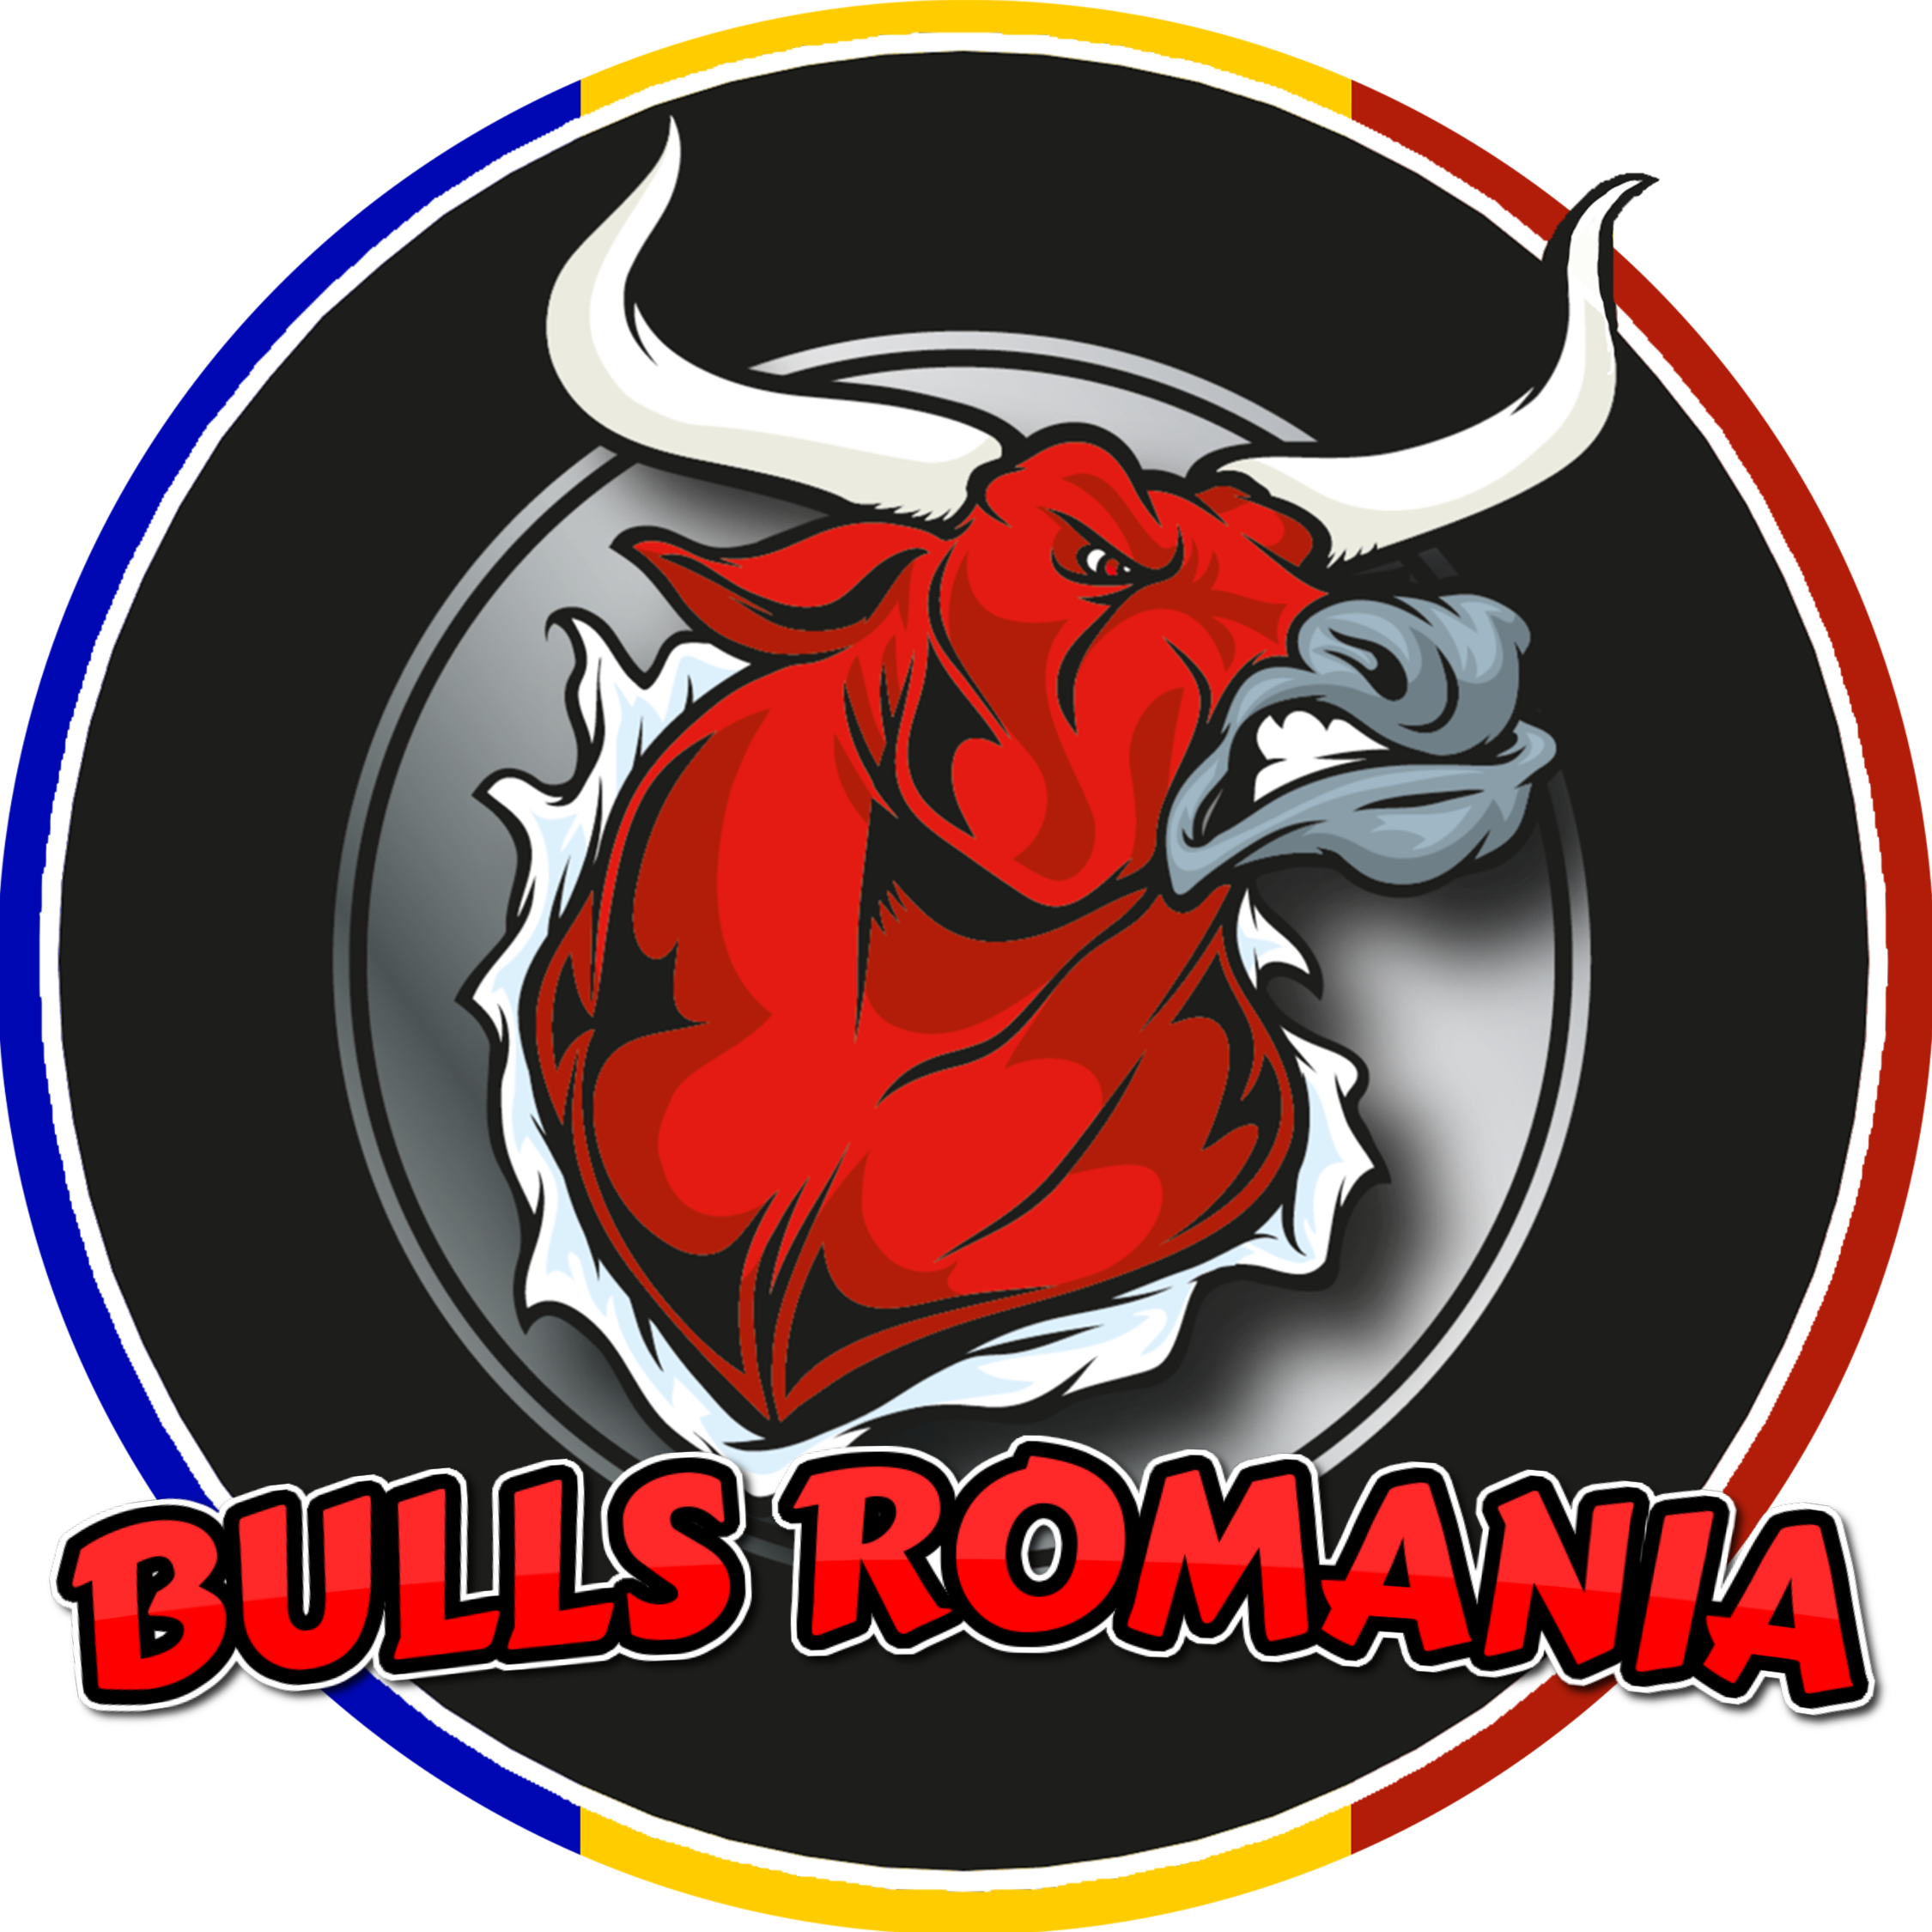 Bulls Romania